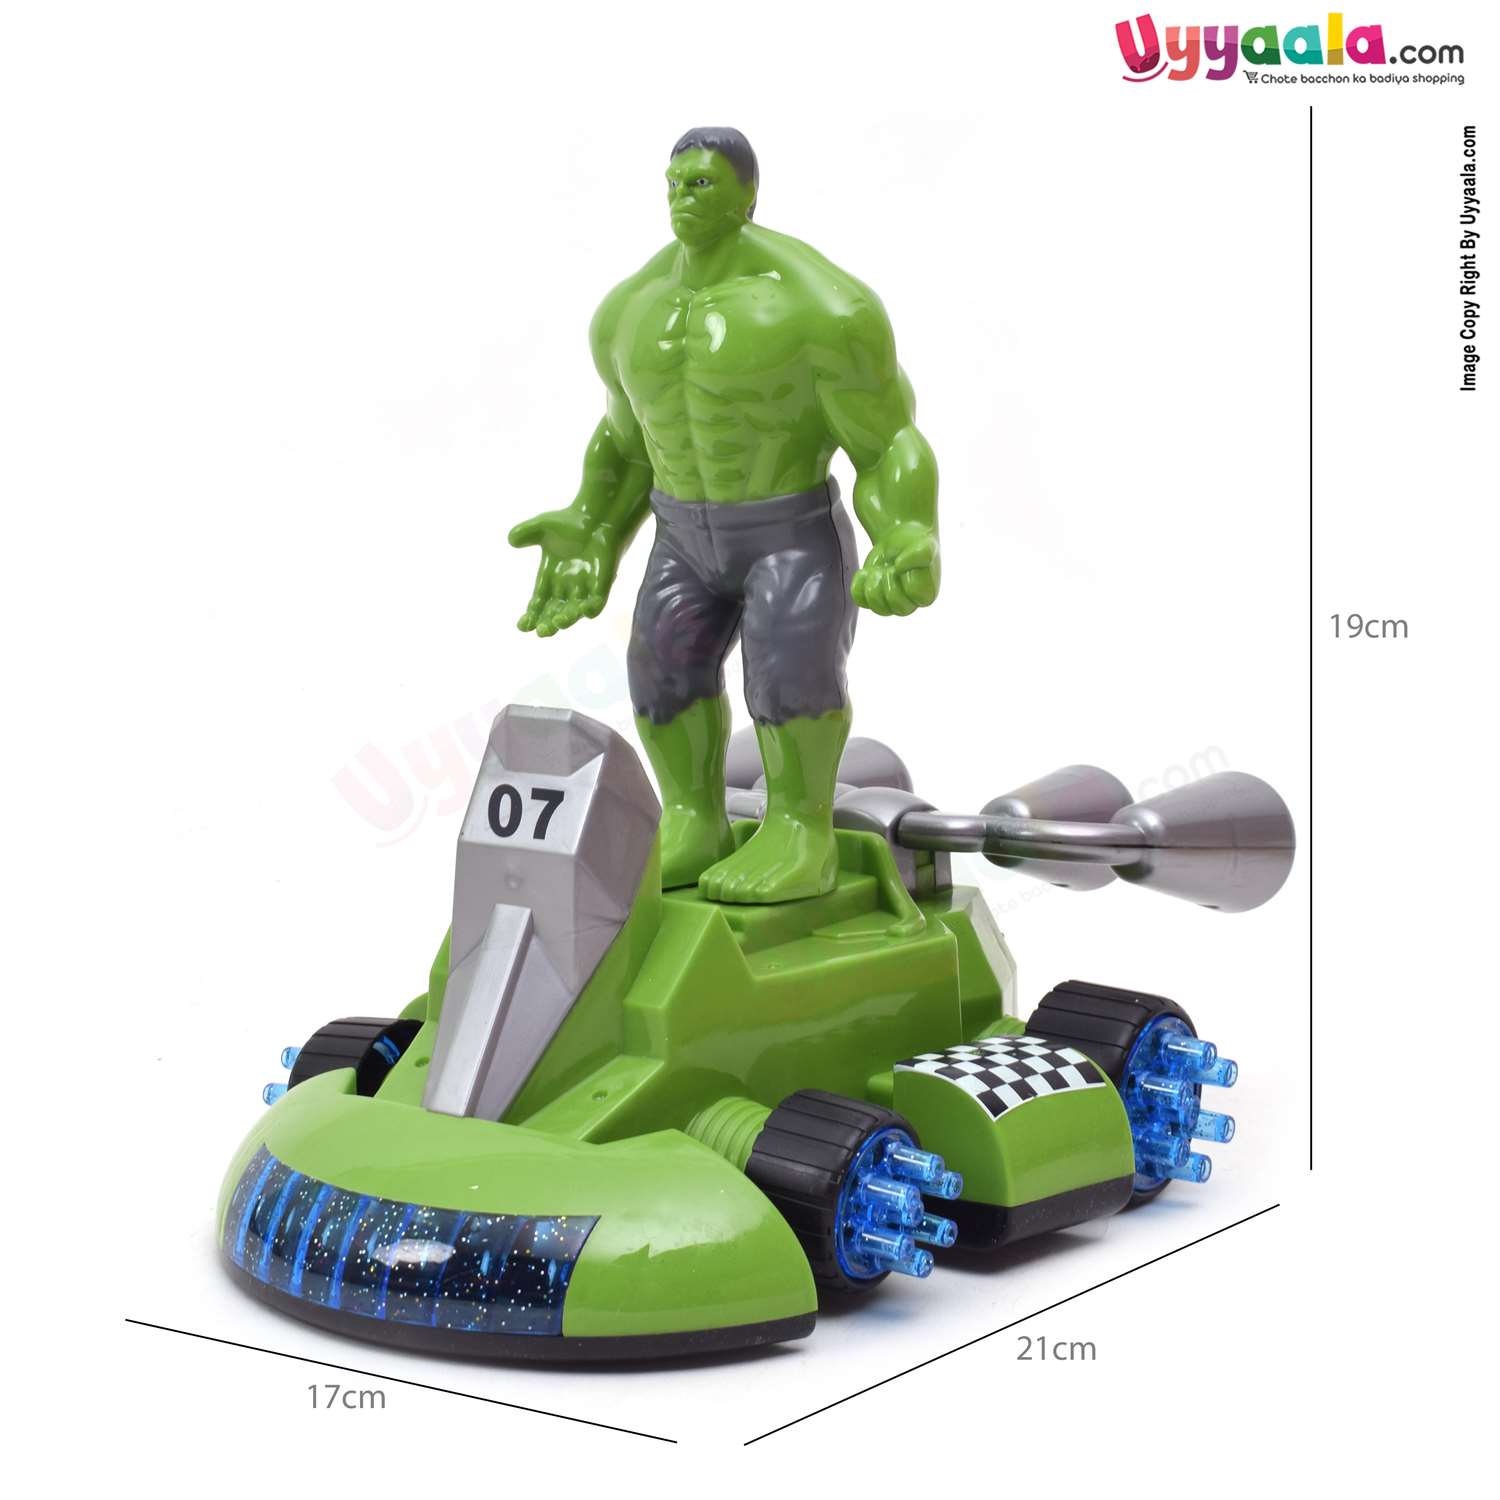 Hulk battery operated cartoon car with 5D lights